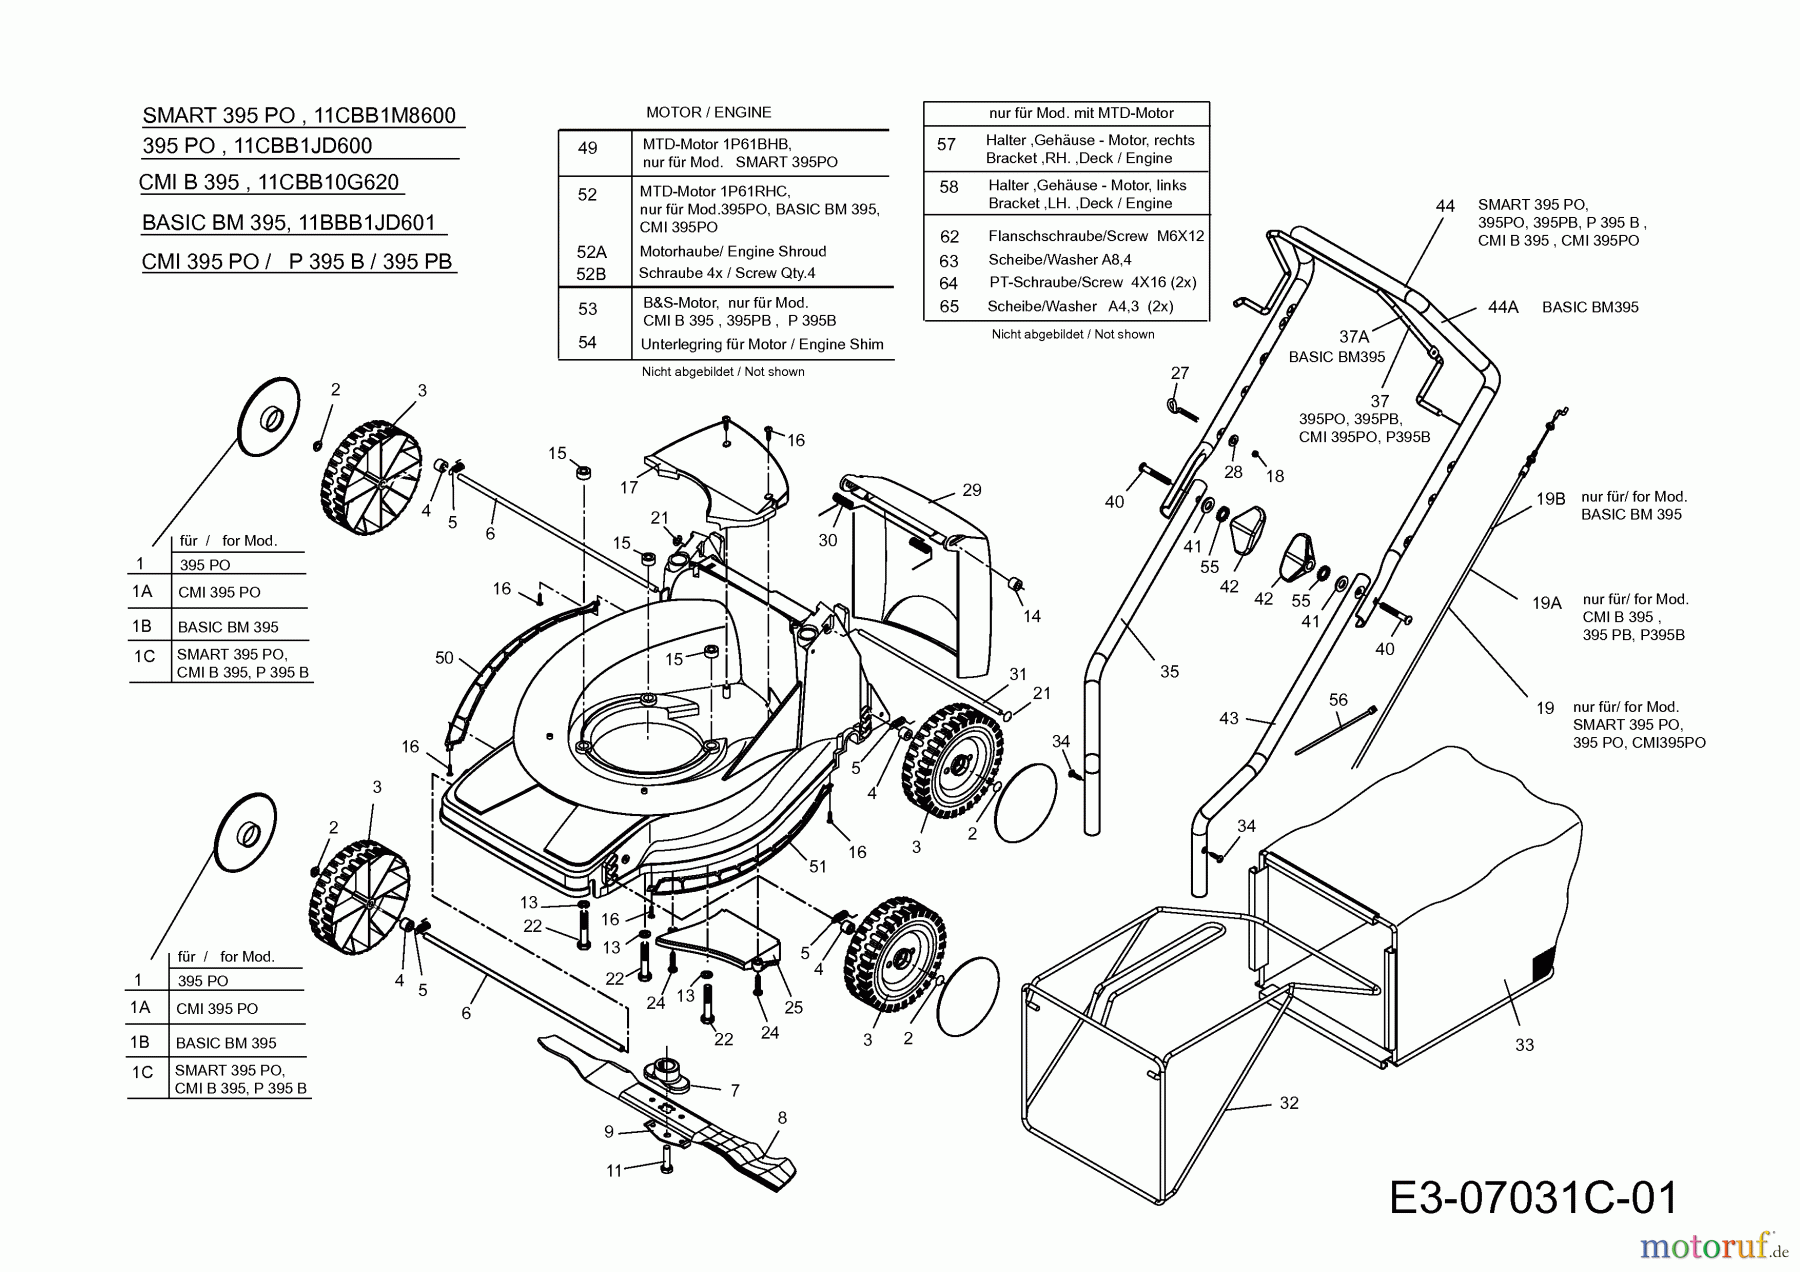  Plantiflor Motormäher Basic BM 395 11BBB1JD601  (2013) Grundgerät